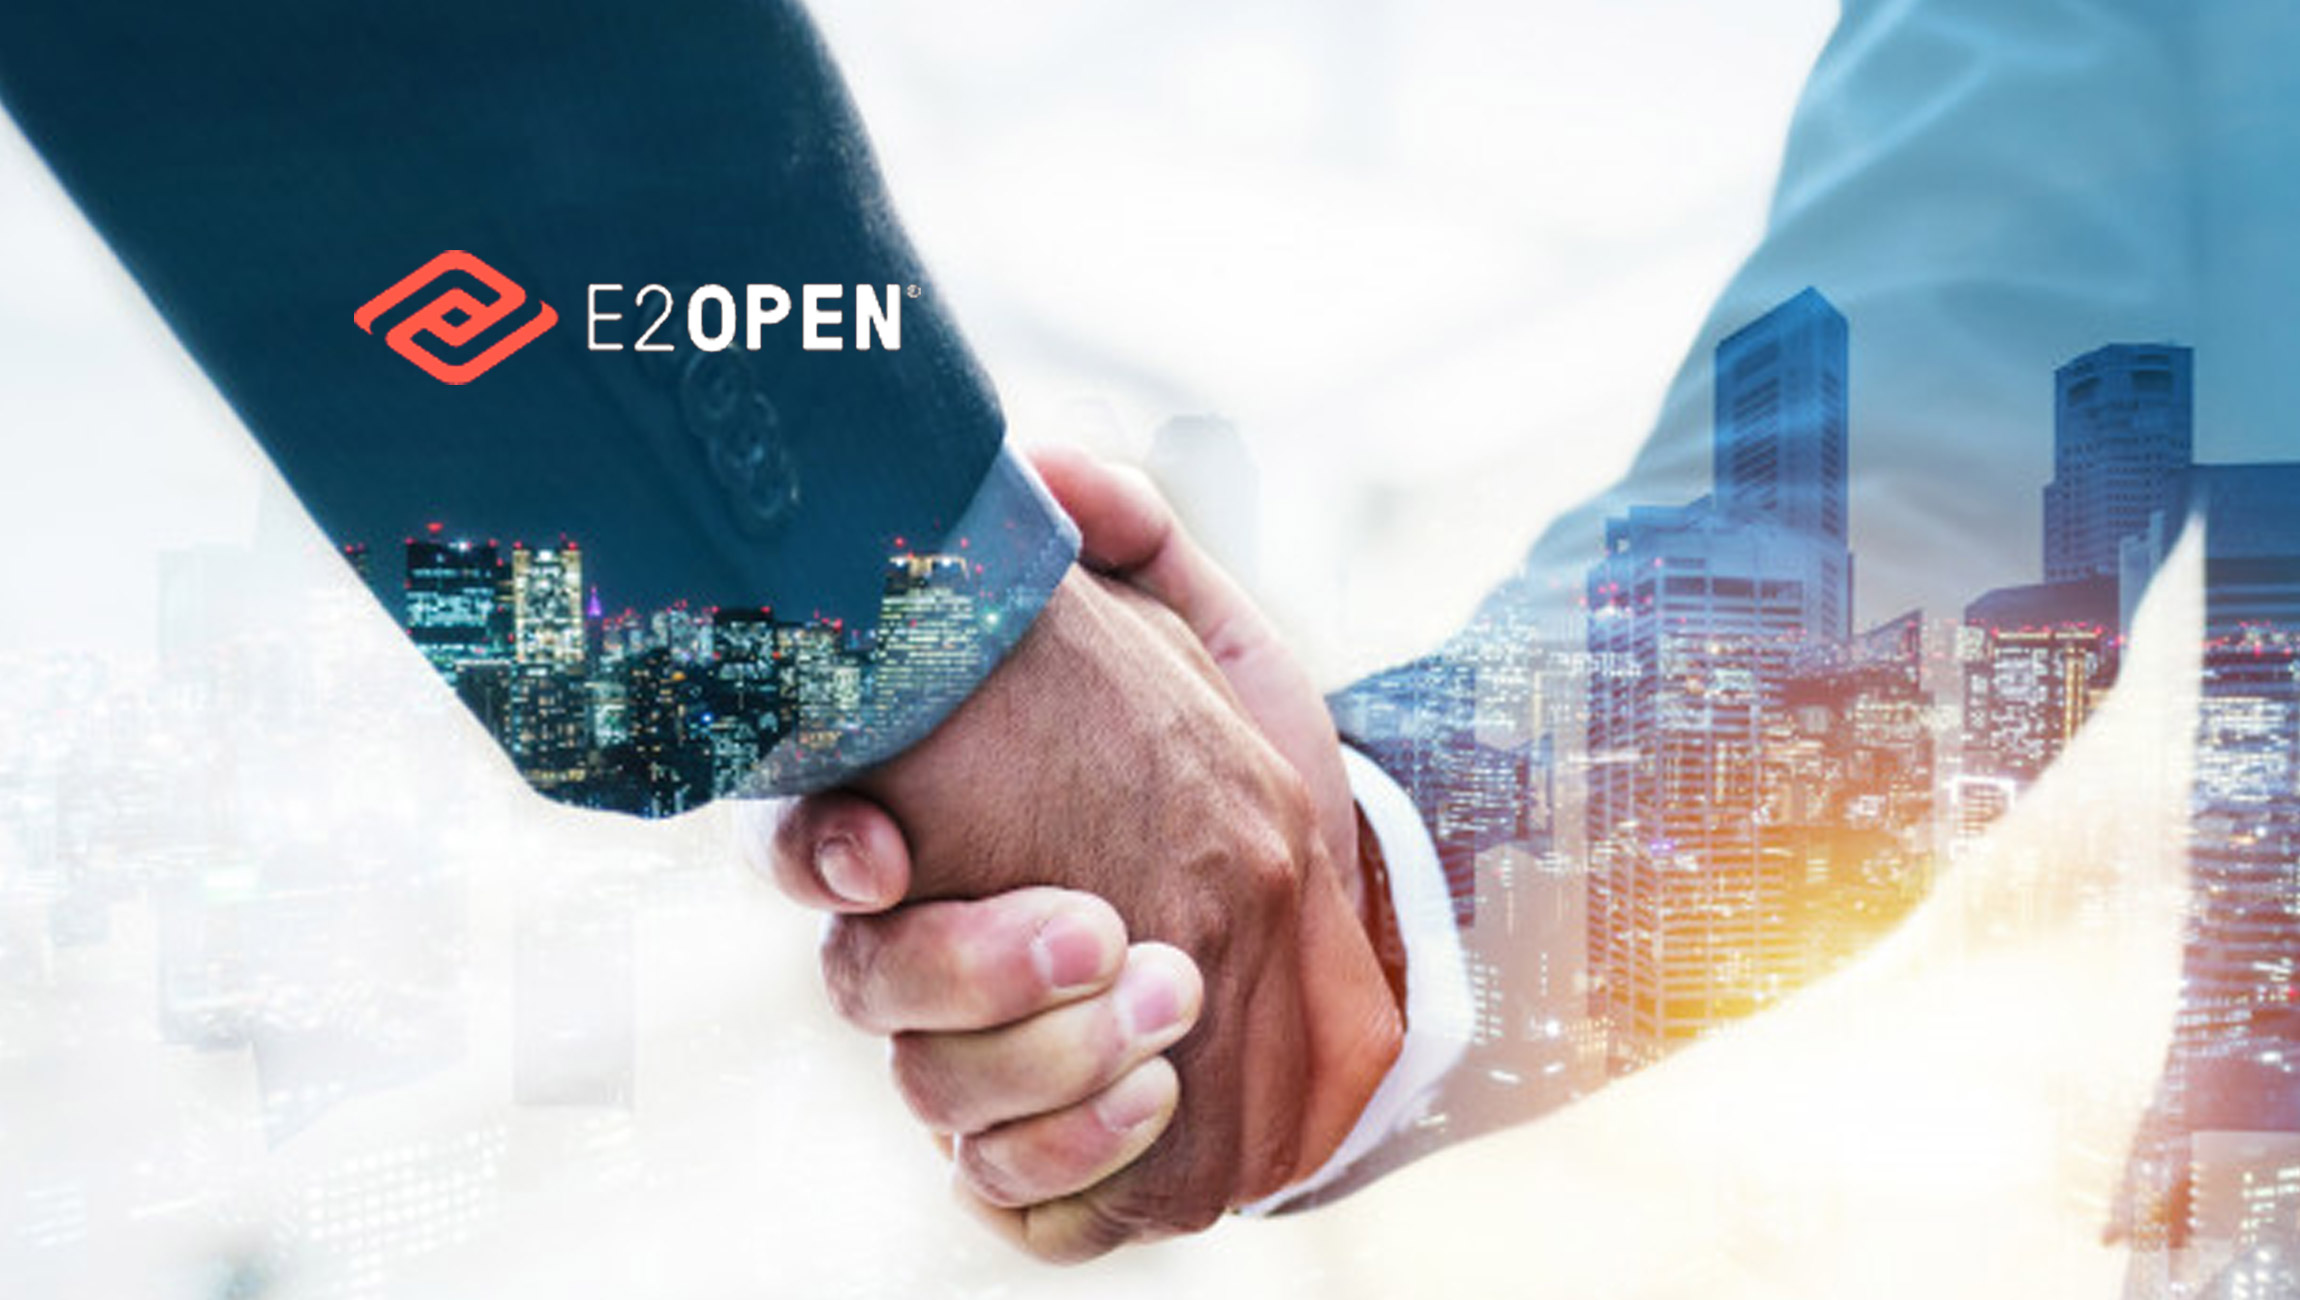 E2open Alliance Partner KPMG LLP to Launch New E2open Practice